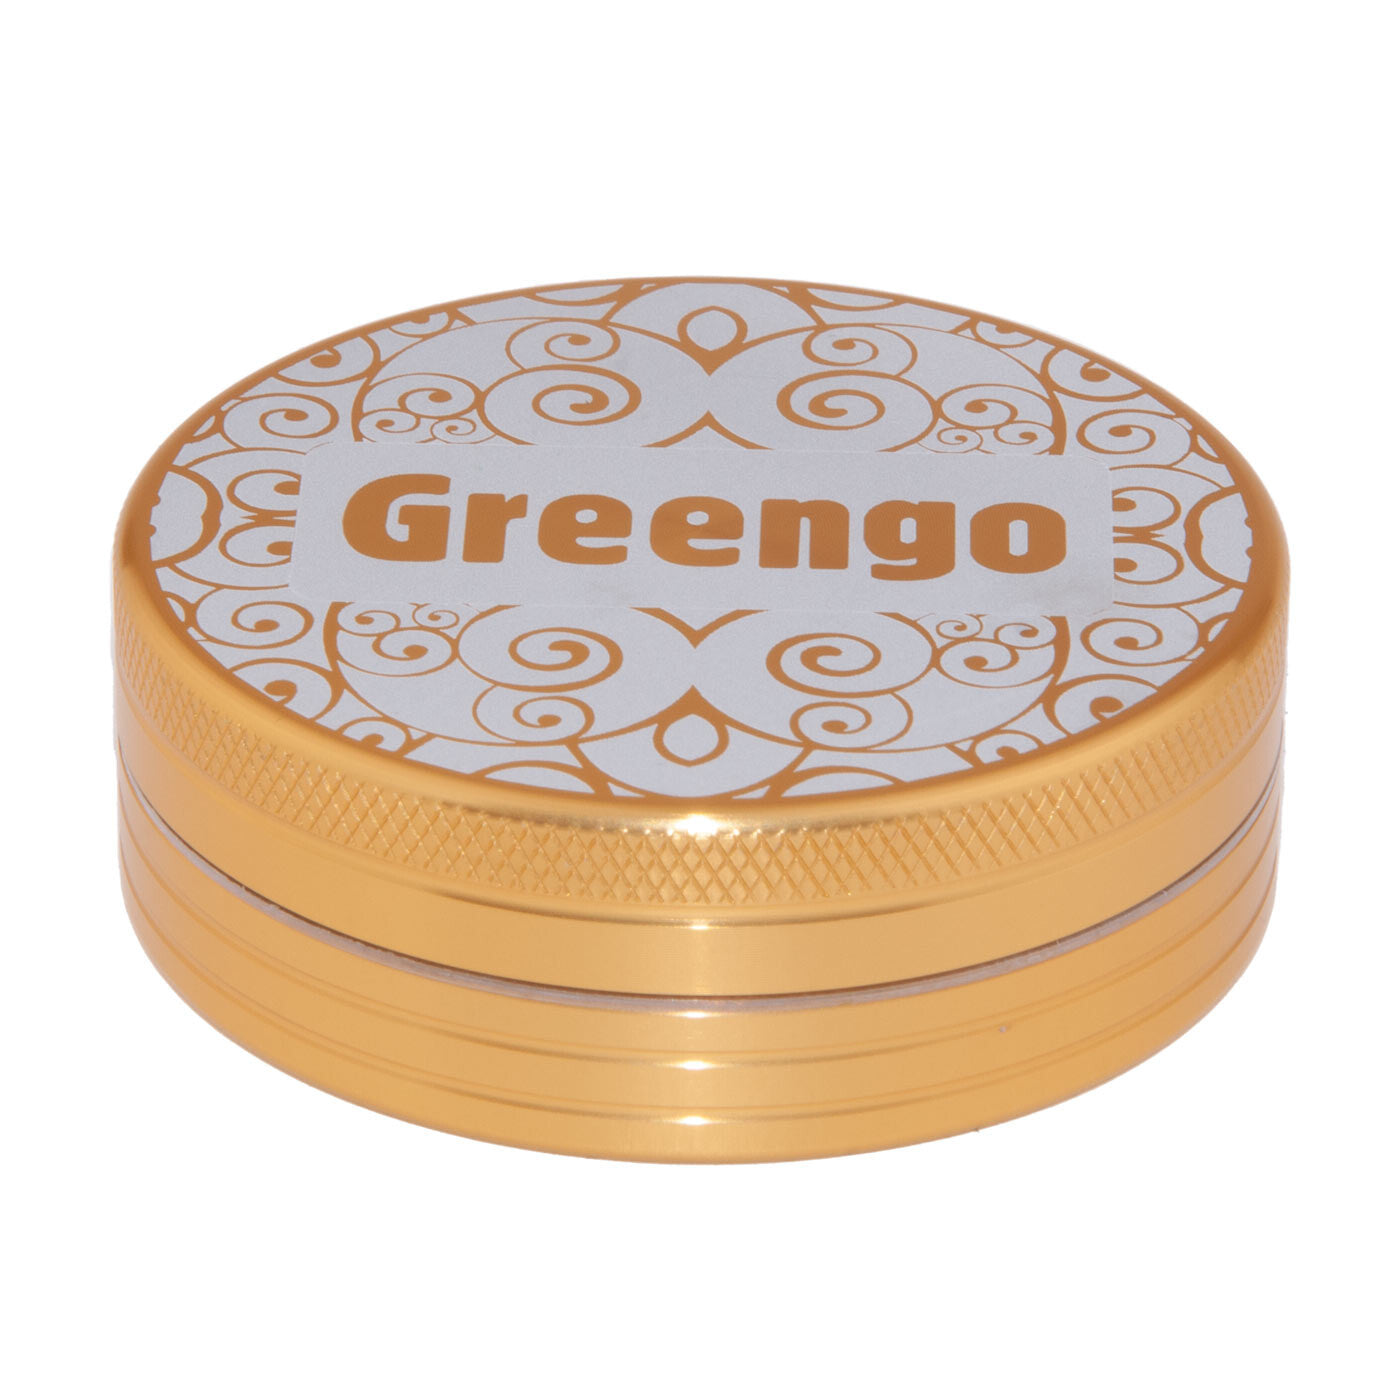 2 Parts Metal Grinder - Greengo